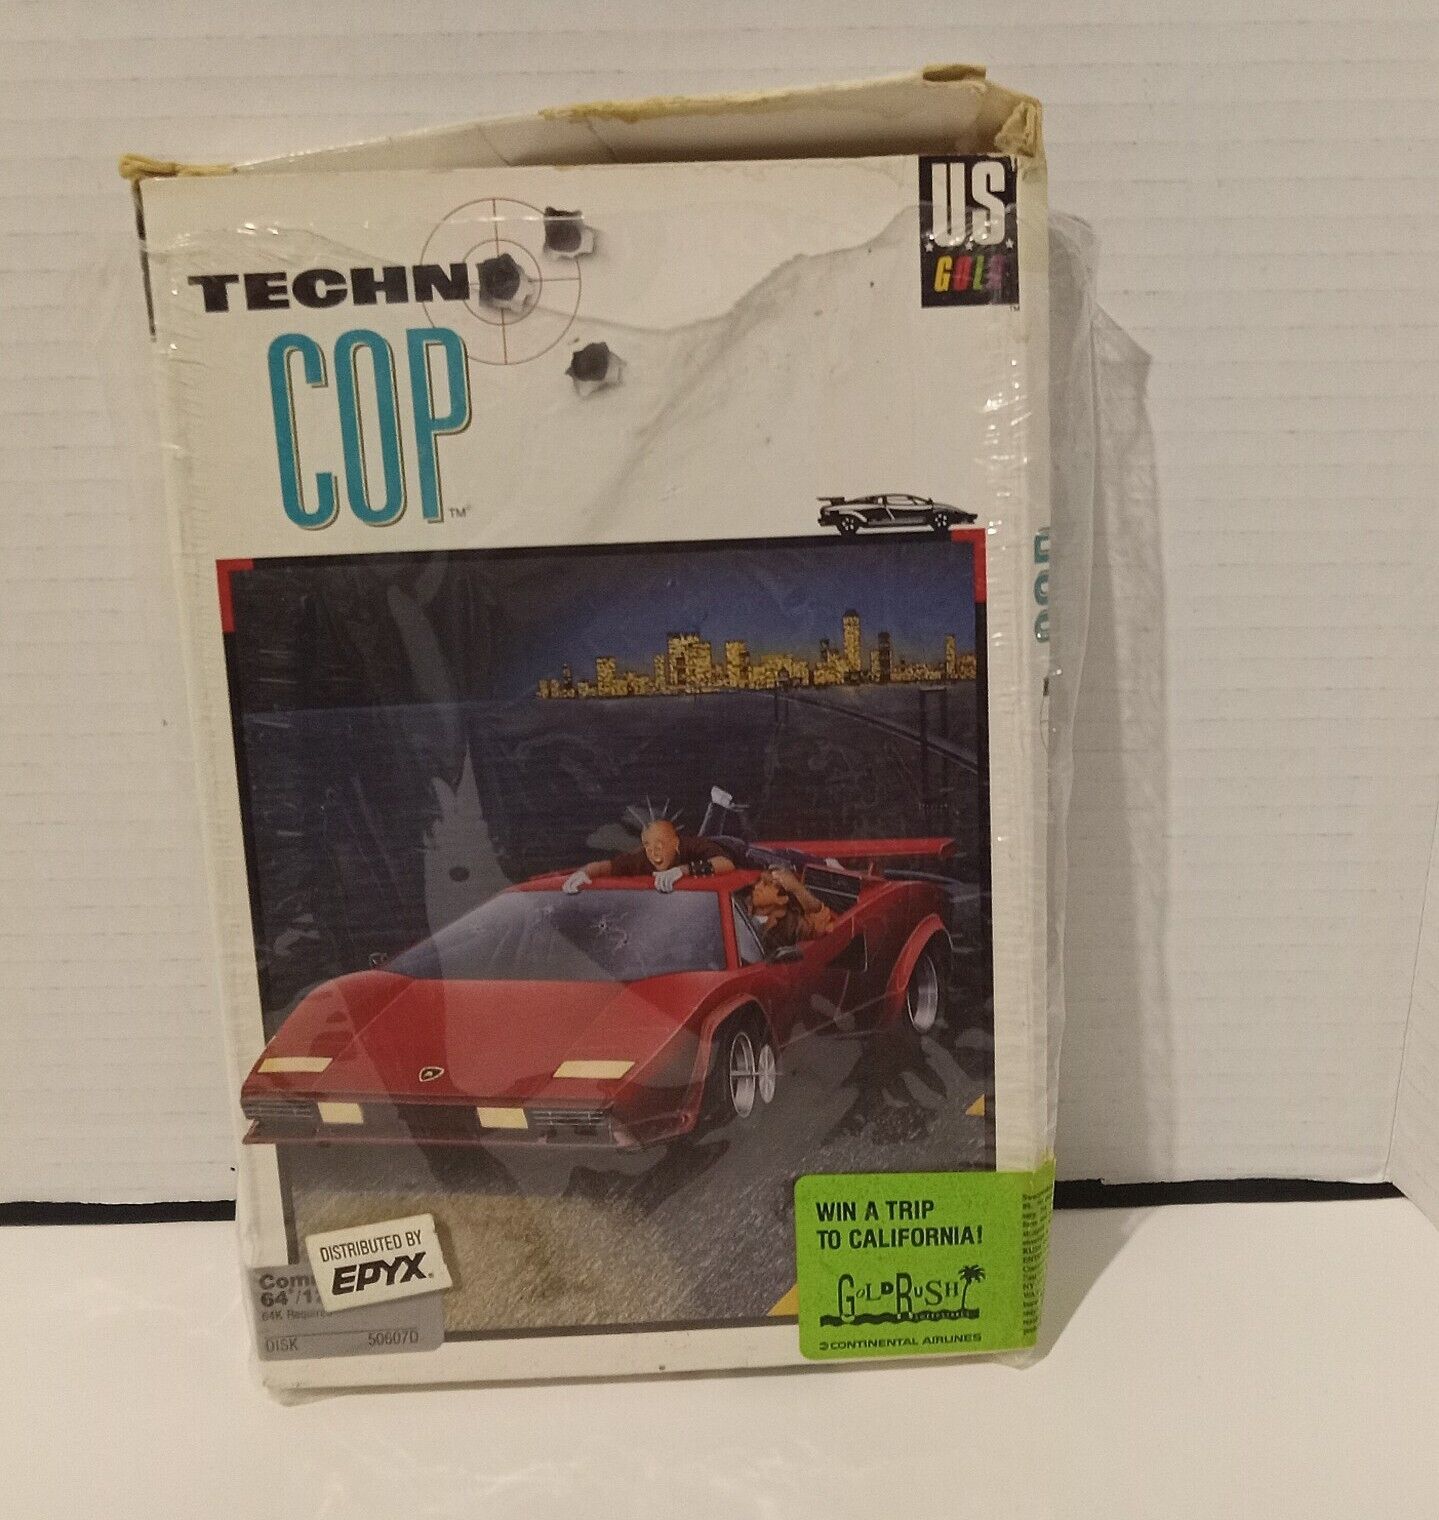 Techno Cop (1988) by U.S Gold for IBM PC Commodore 64/128